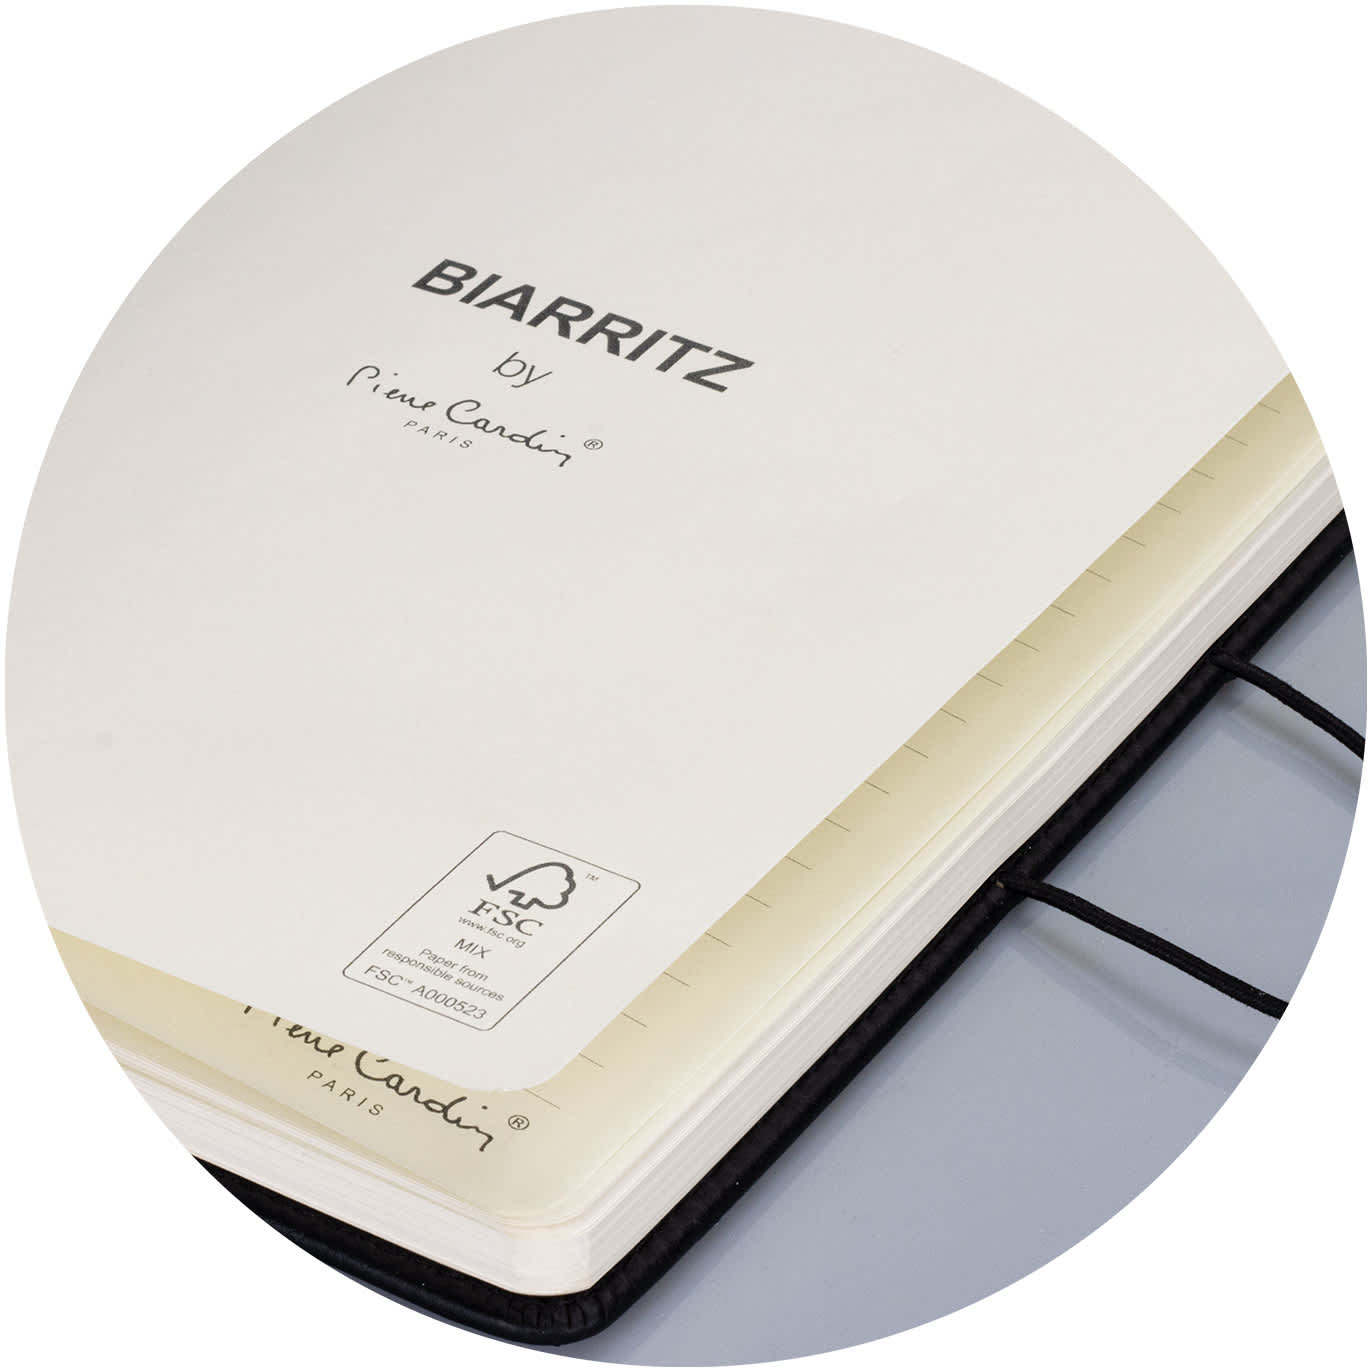 Pierre Cardin Biarritz Notebook